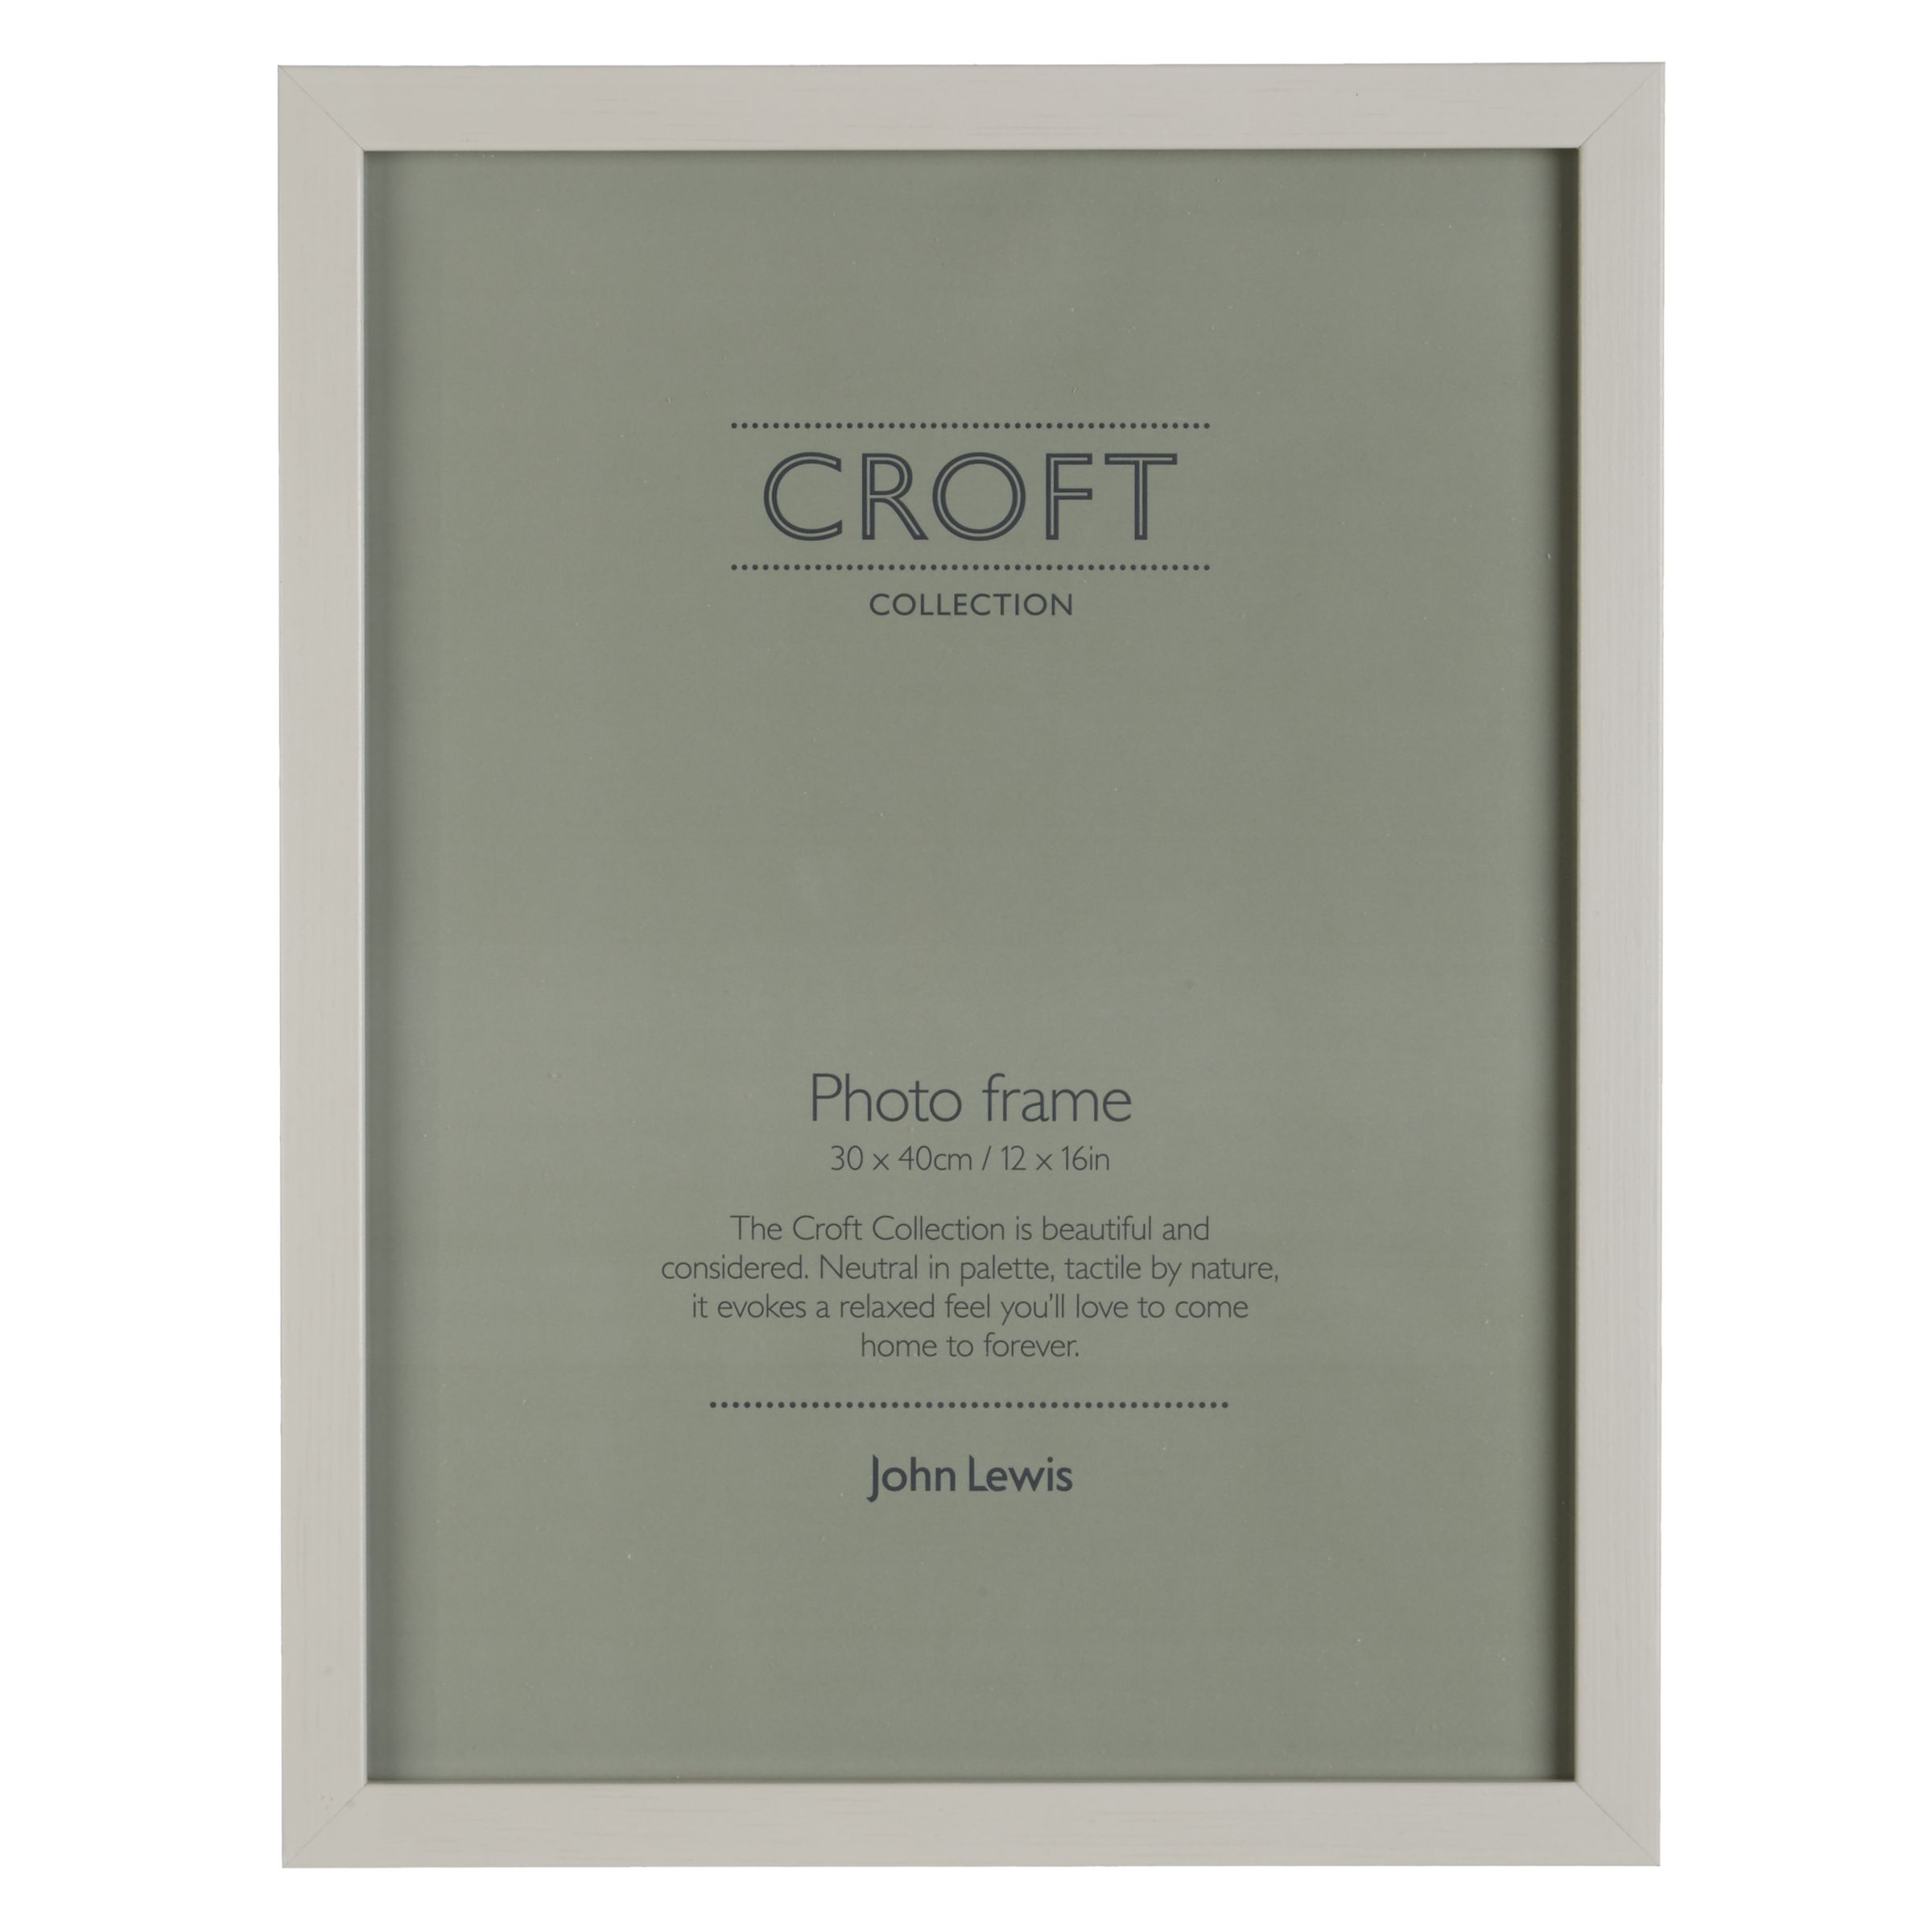 Croft Collection Photo Frame FSC-Certified, 30 x 40cm